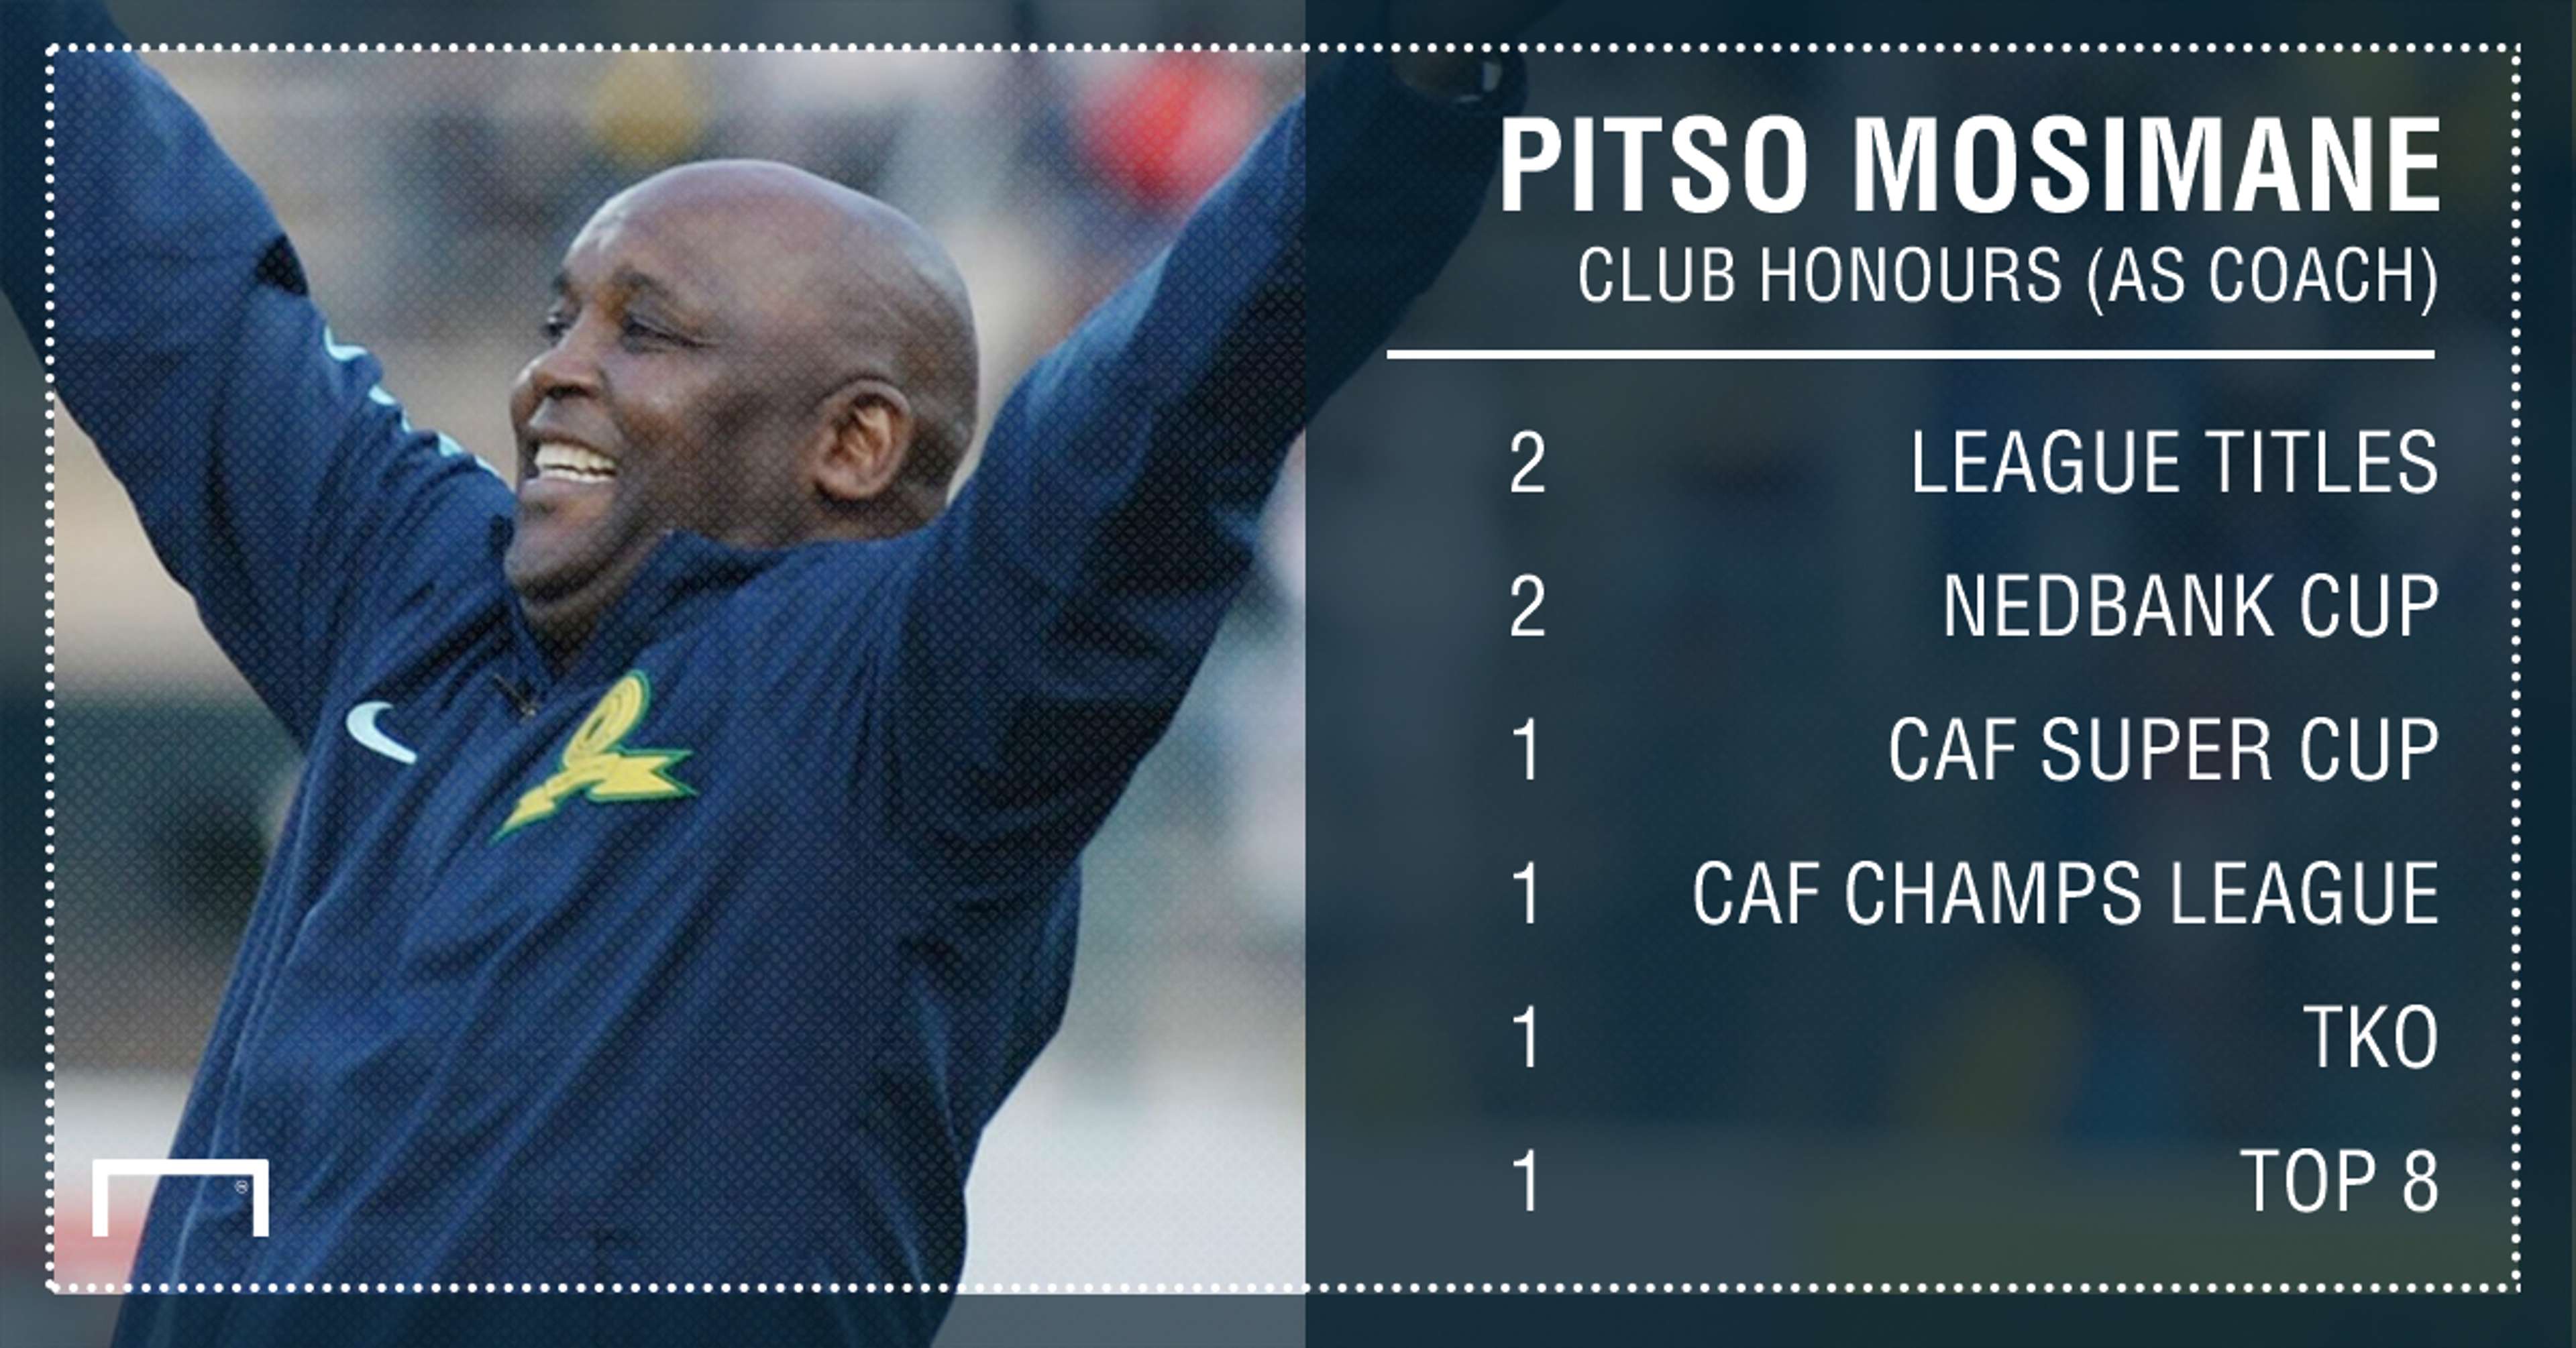 Pitso Mosimane honours PS